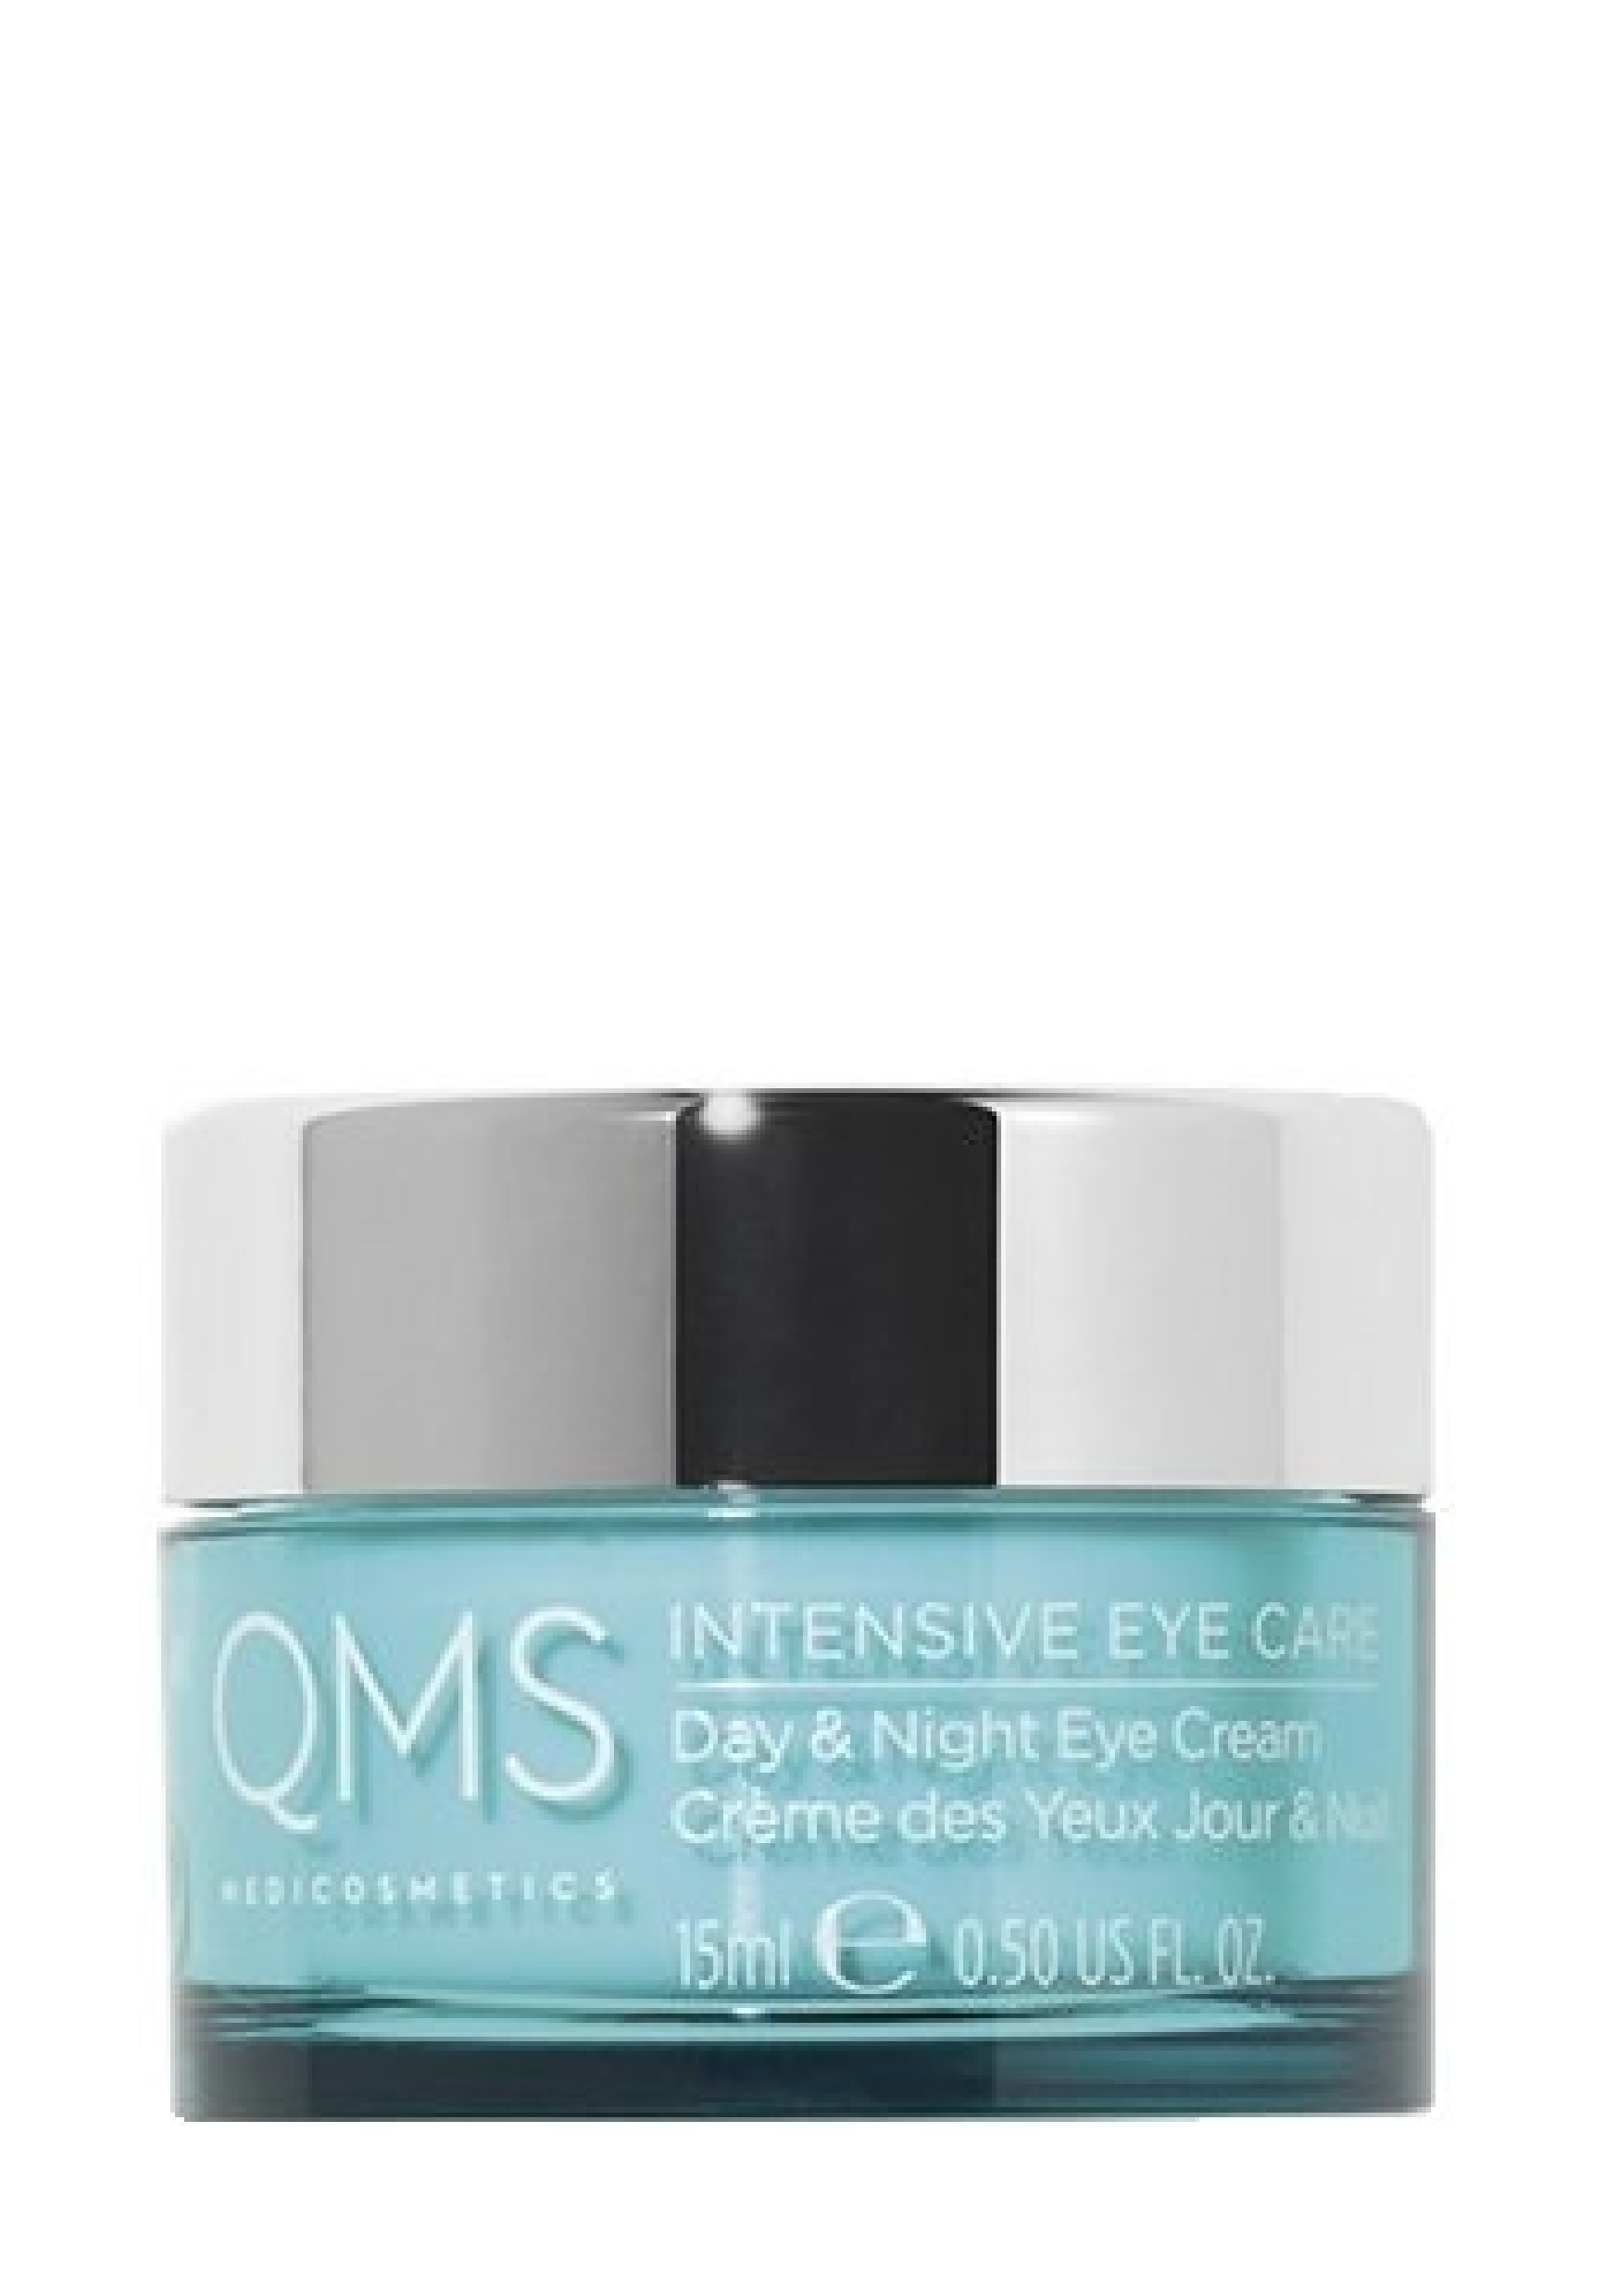 QMS Intensive Eye care Day & Night Eye Cream